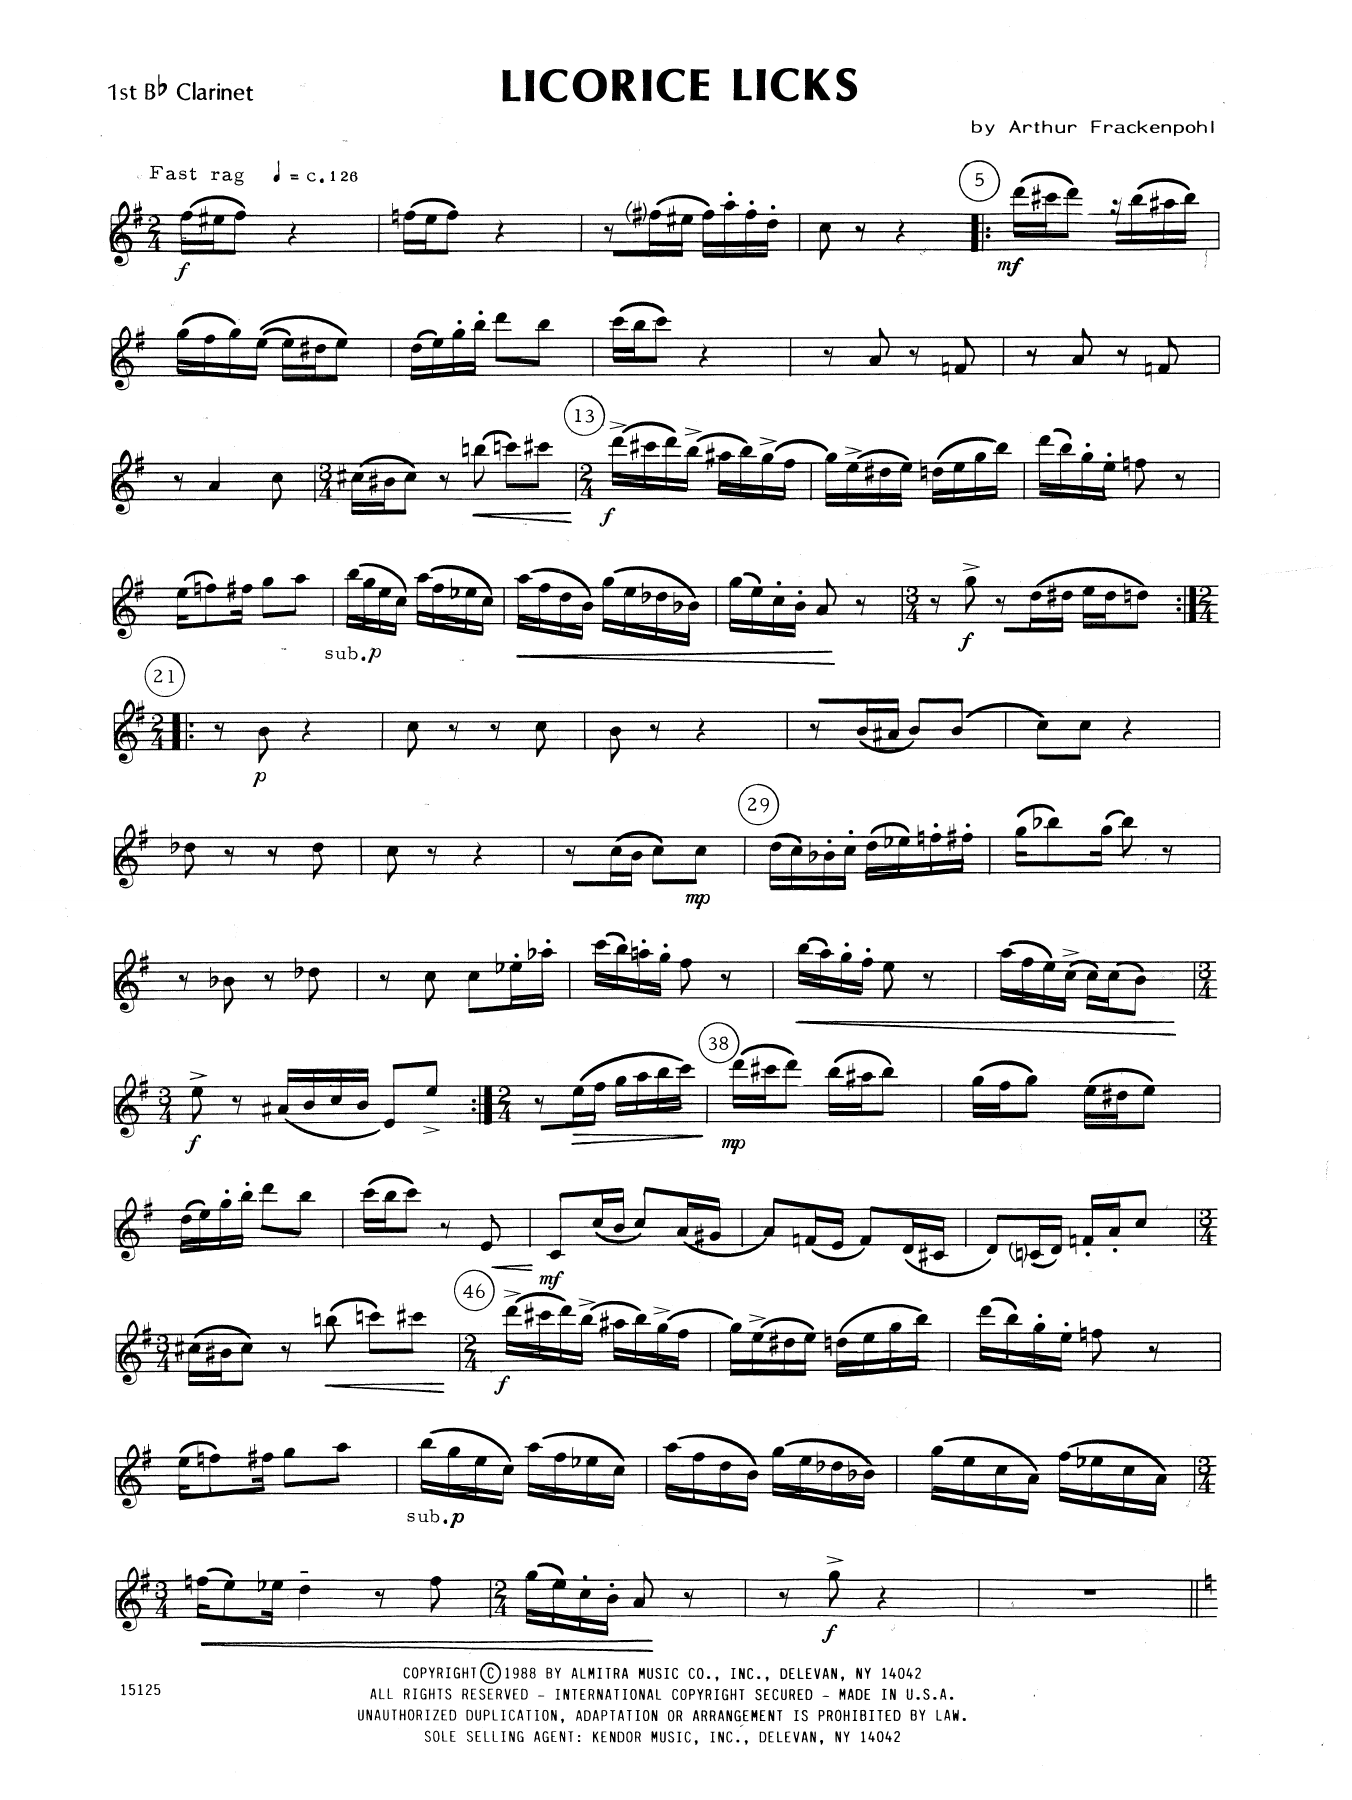 Download Arthur Frackenpohl Licorice Licks - 1st Bb Clarinet Sheet Music